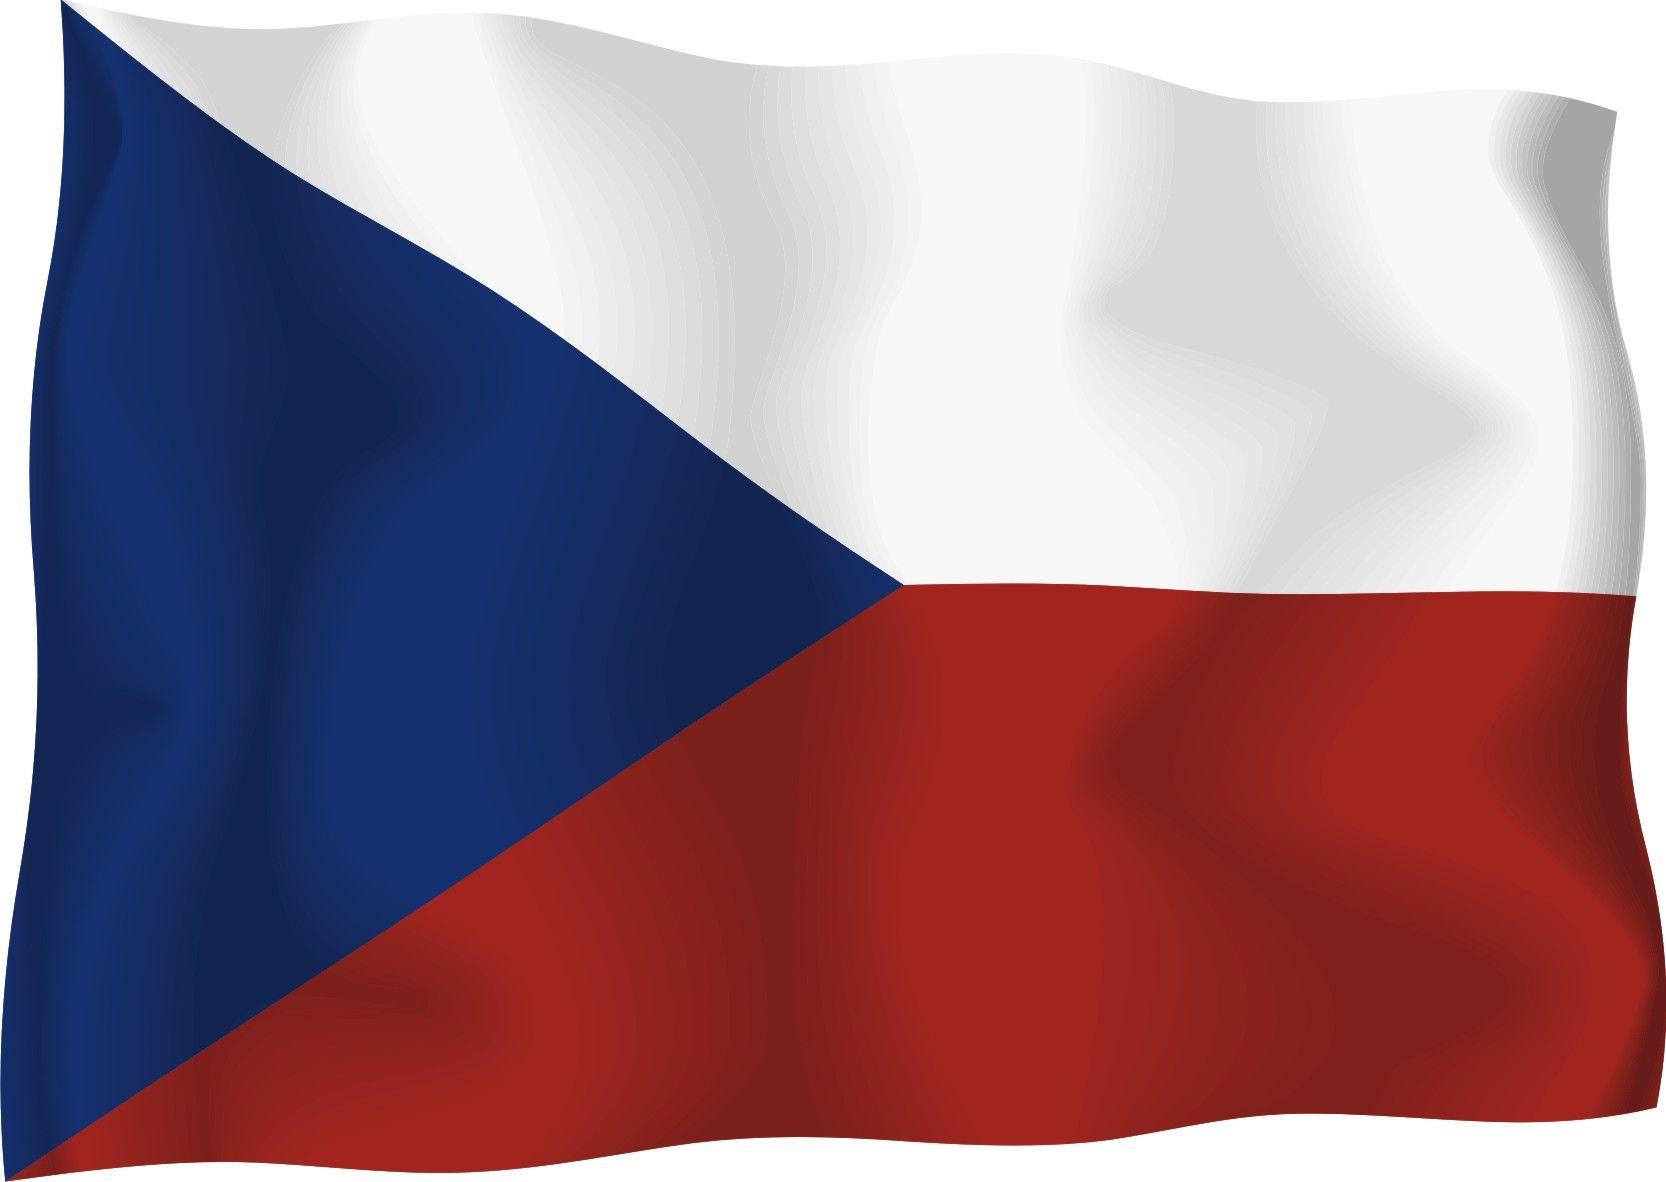 Czech Republic Flag HD Wallpapers - Top Free Czech Republic Flag HD ...